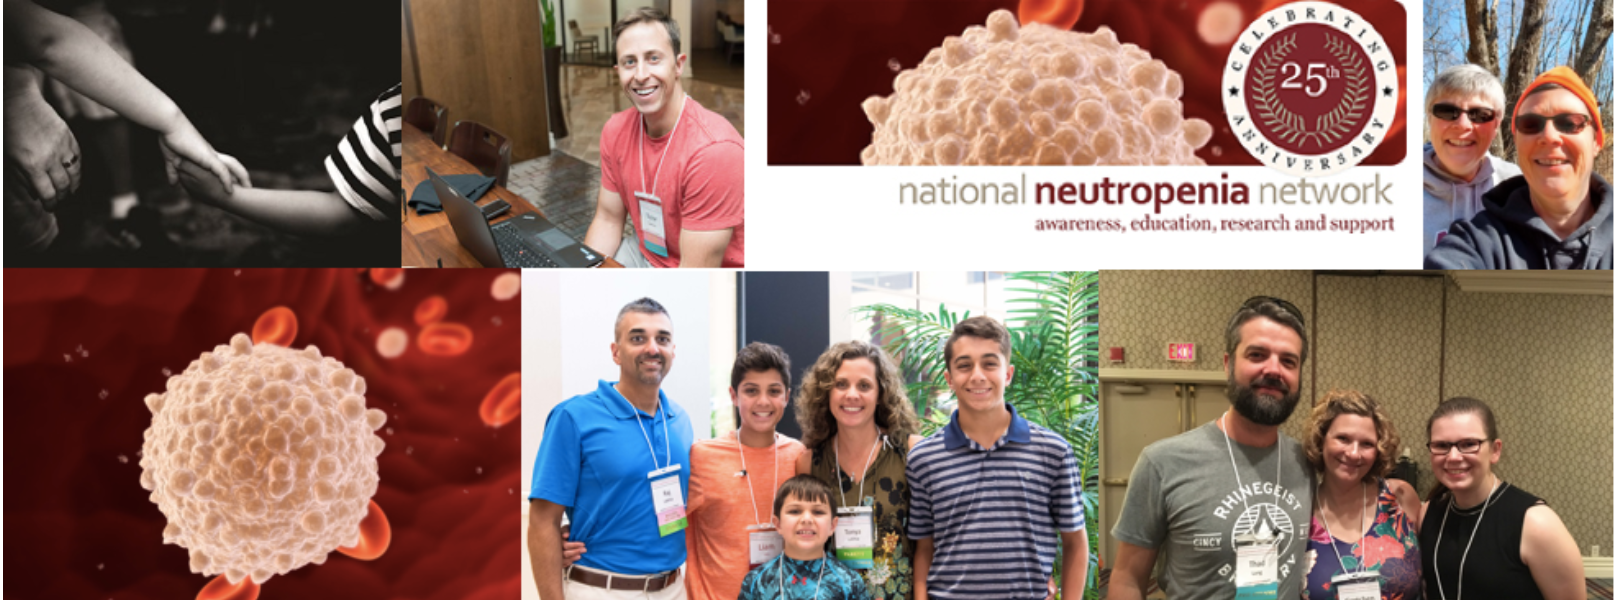 National Neutropenia Network Inc.